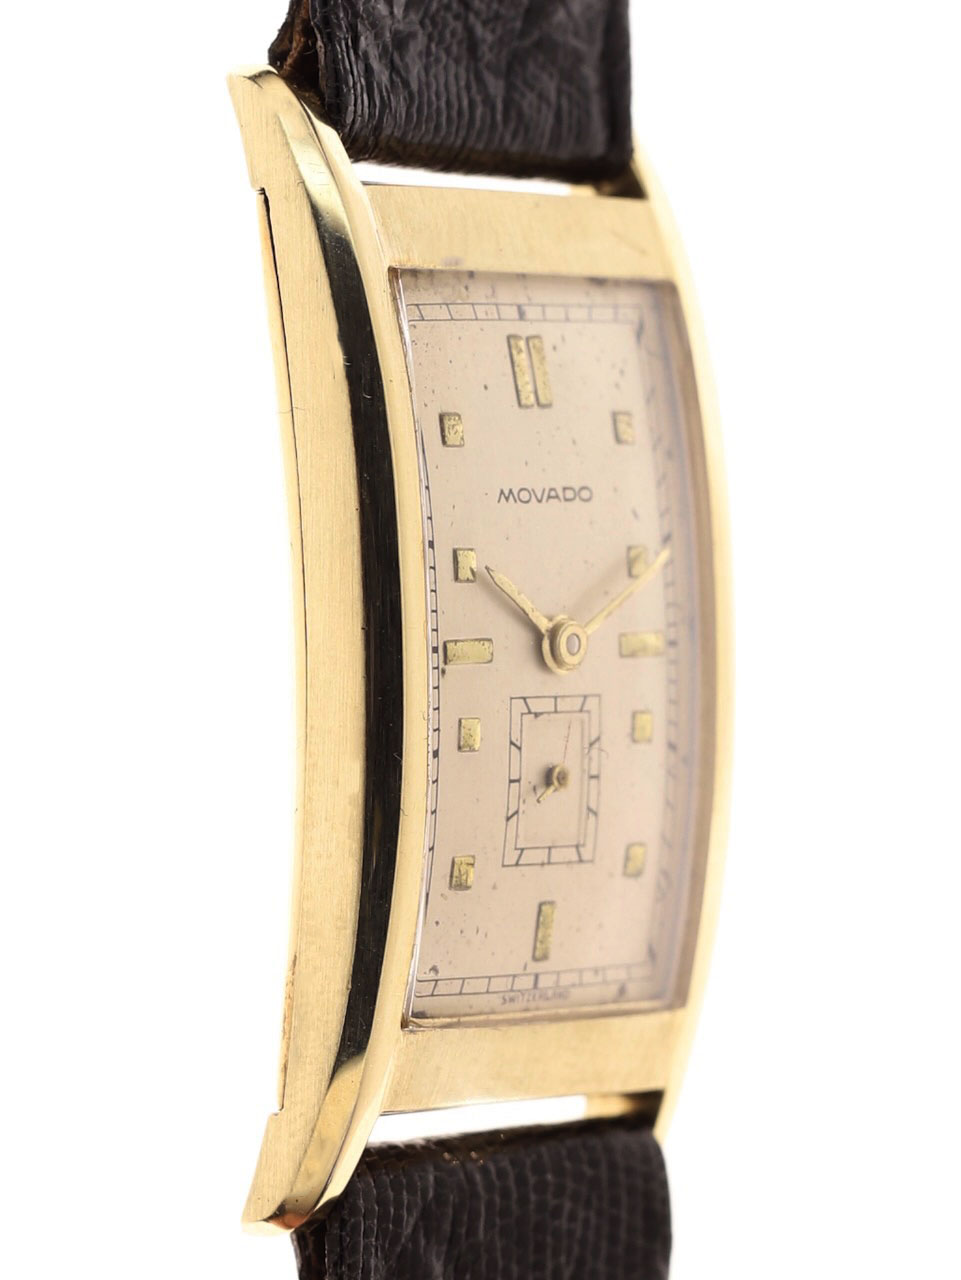 Vintage 1940s Omega 18K Gold Case Manual Winding Watch | eBay